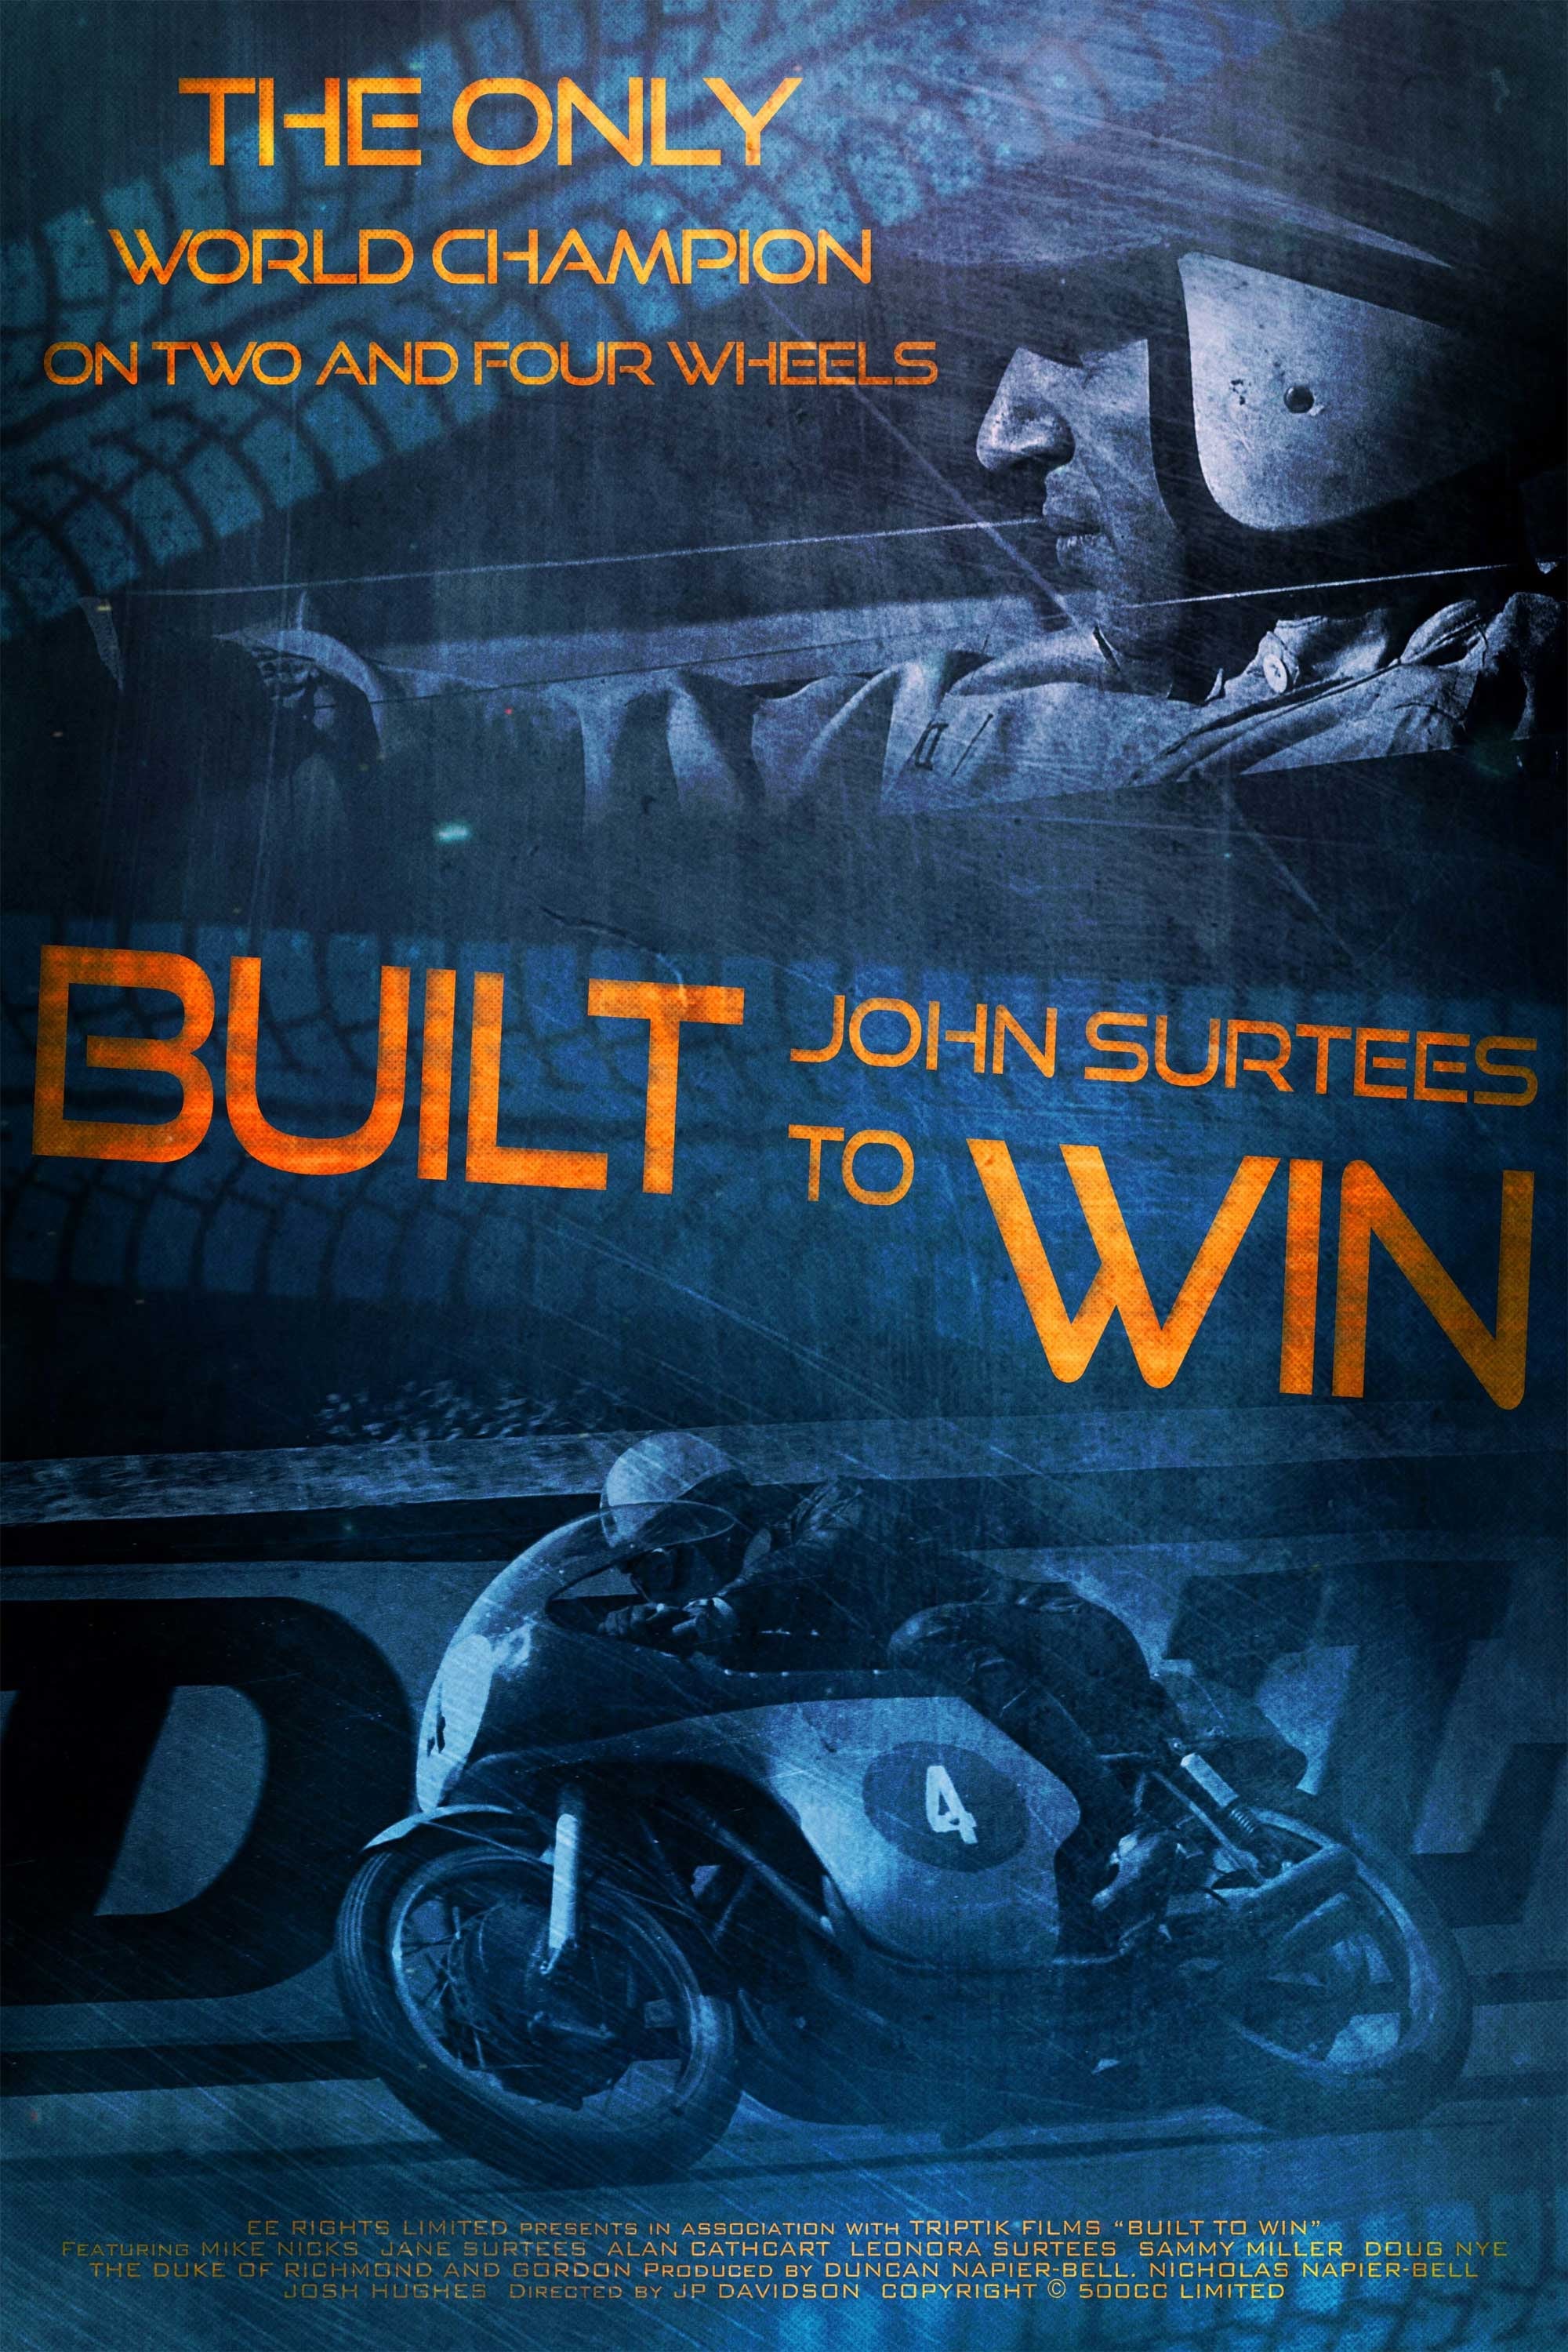 Built To Win: John Surtees